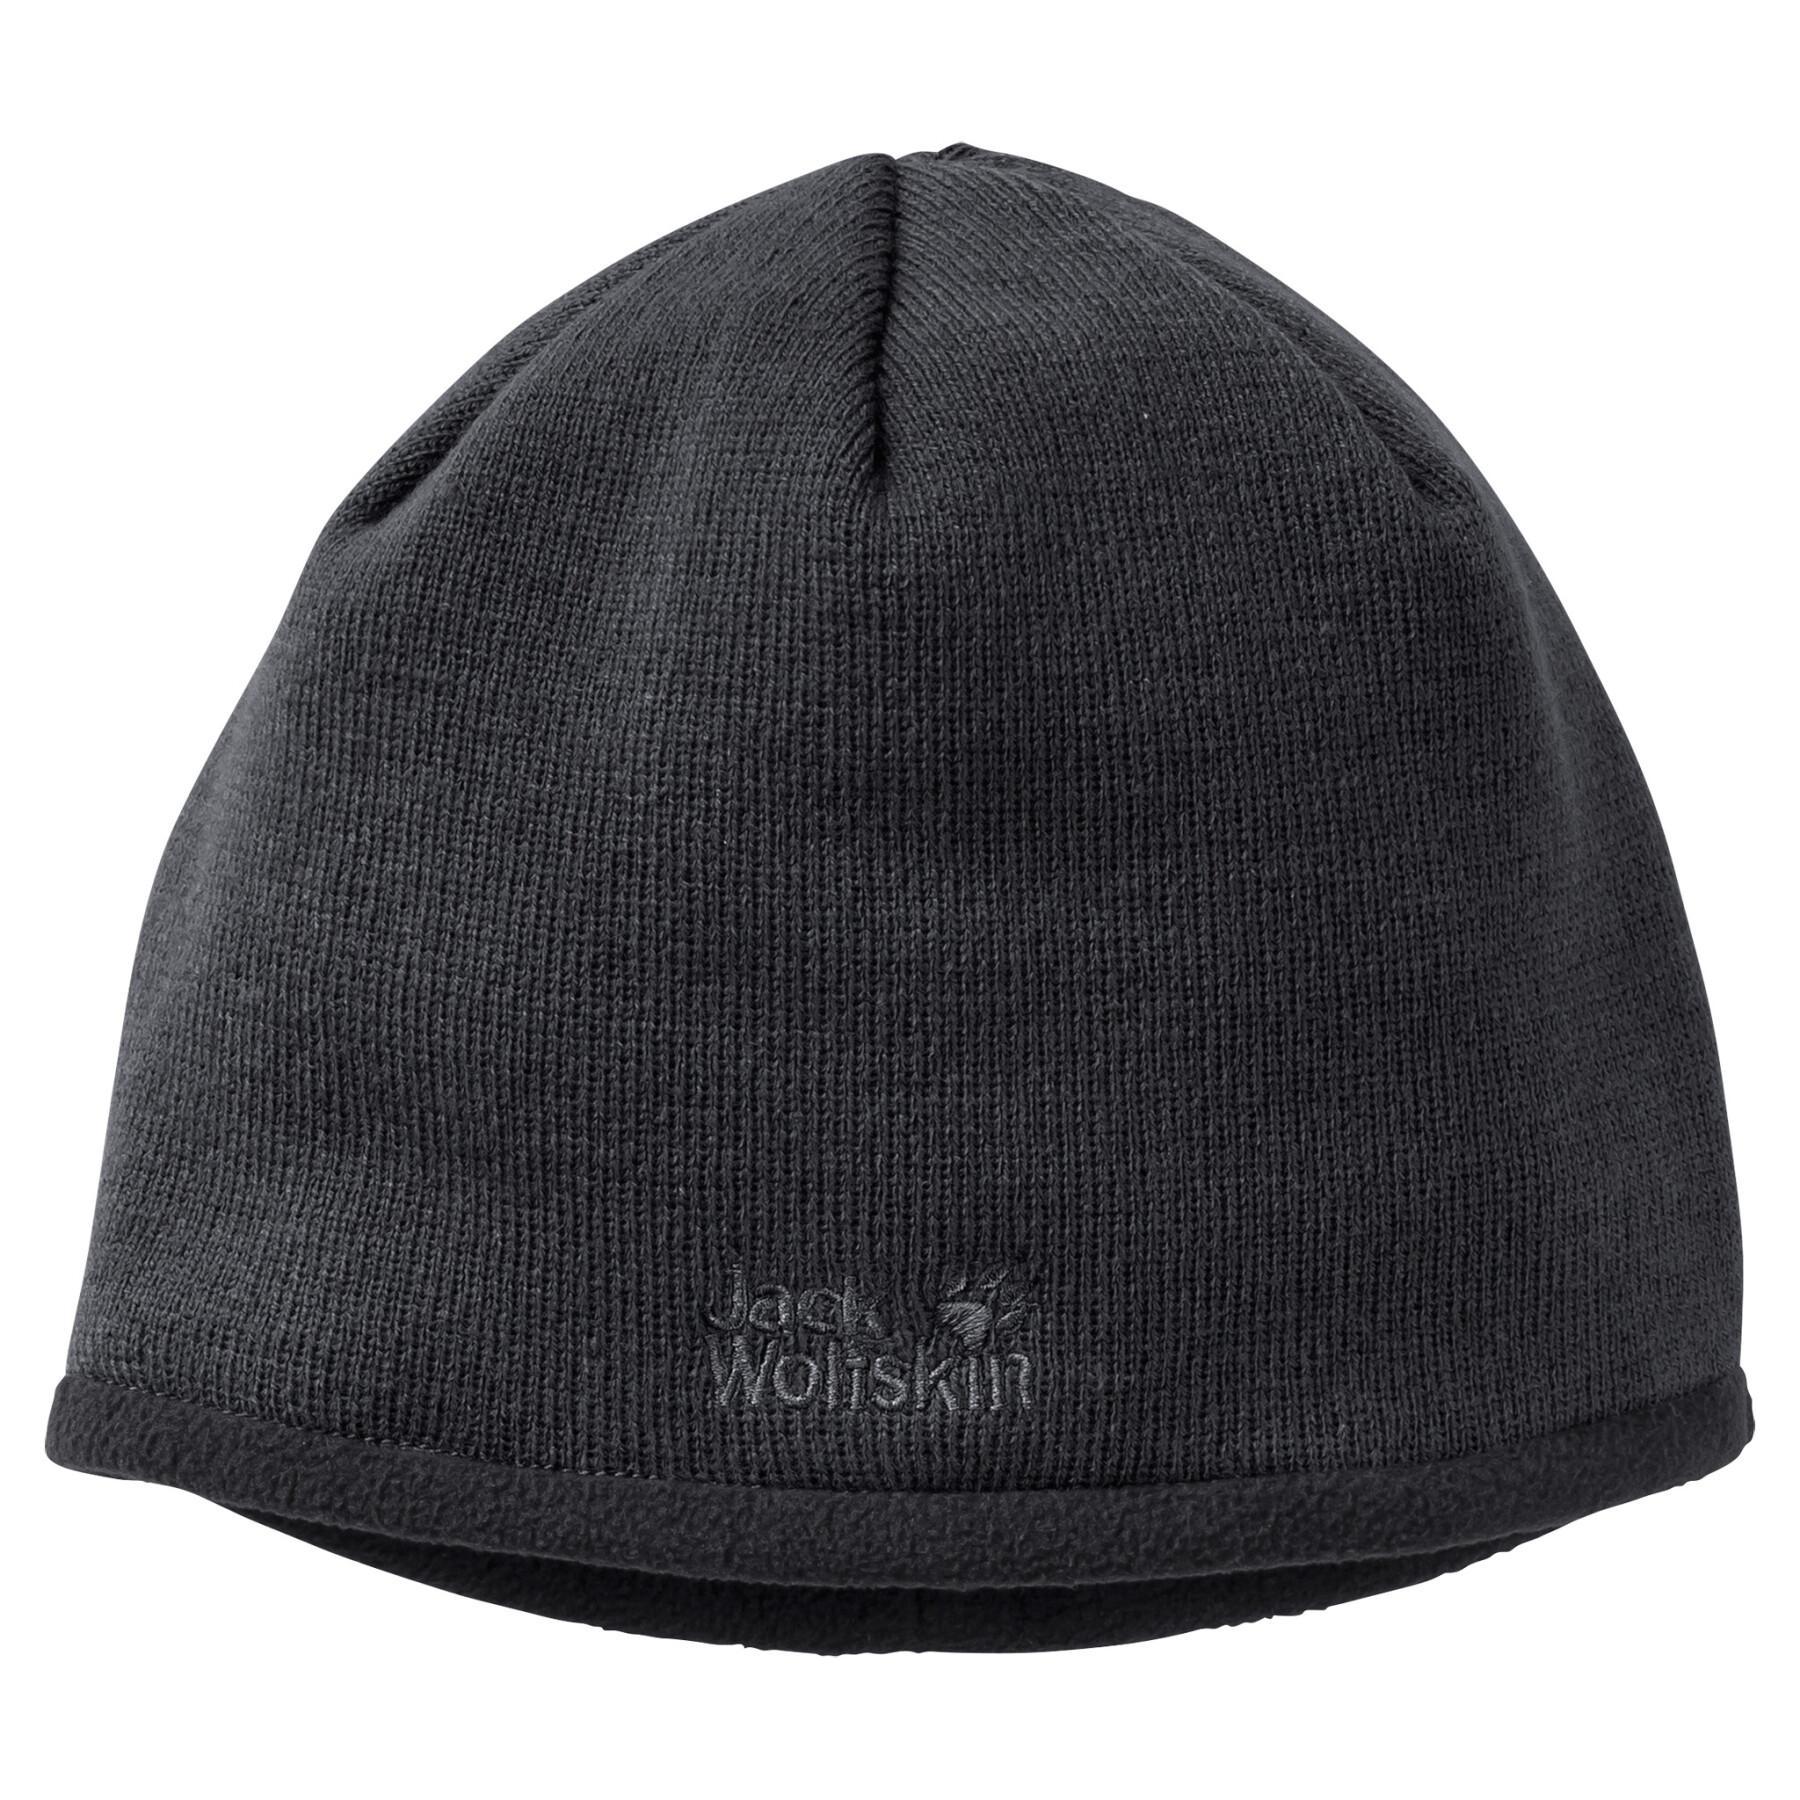 Cappello Jack Wolfskin stormlock logo knit